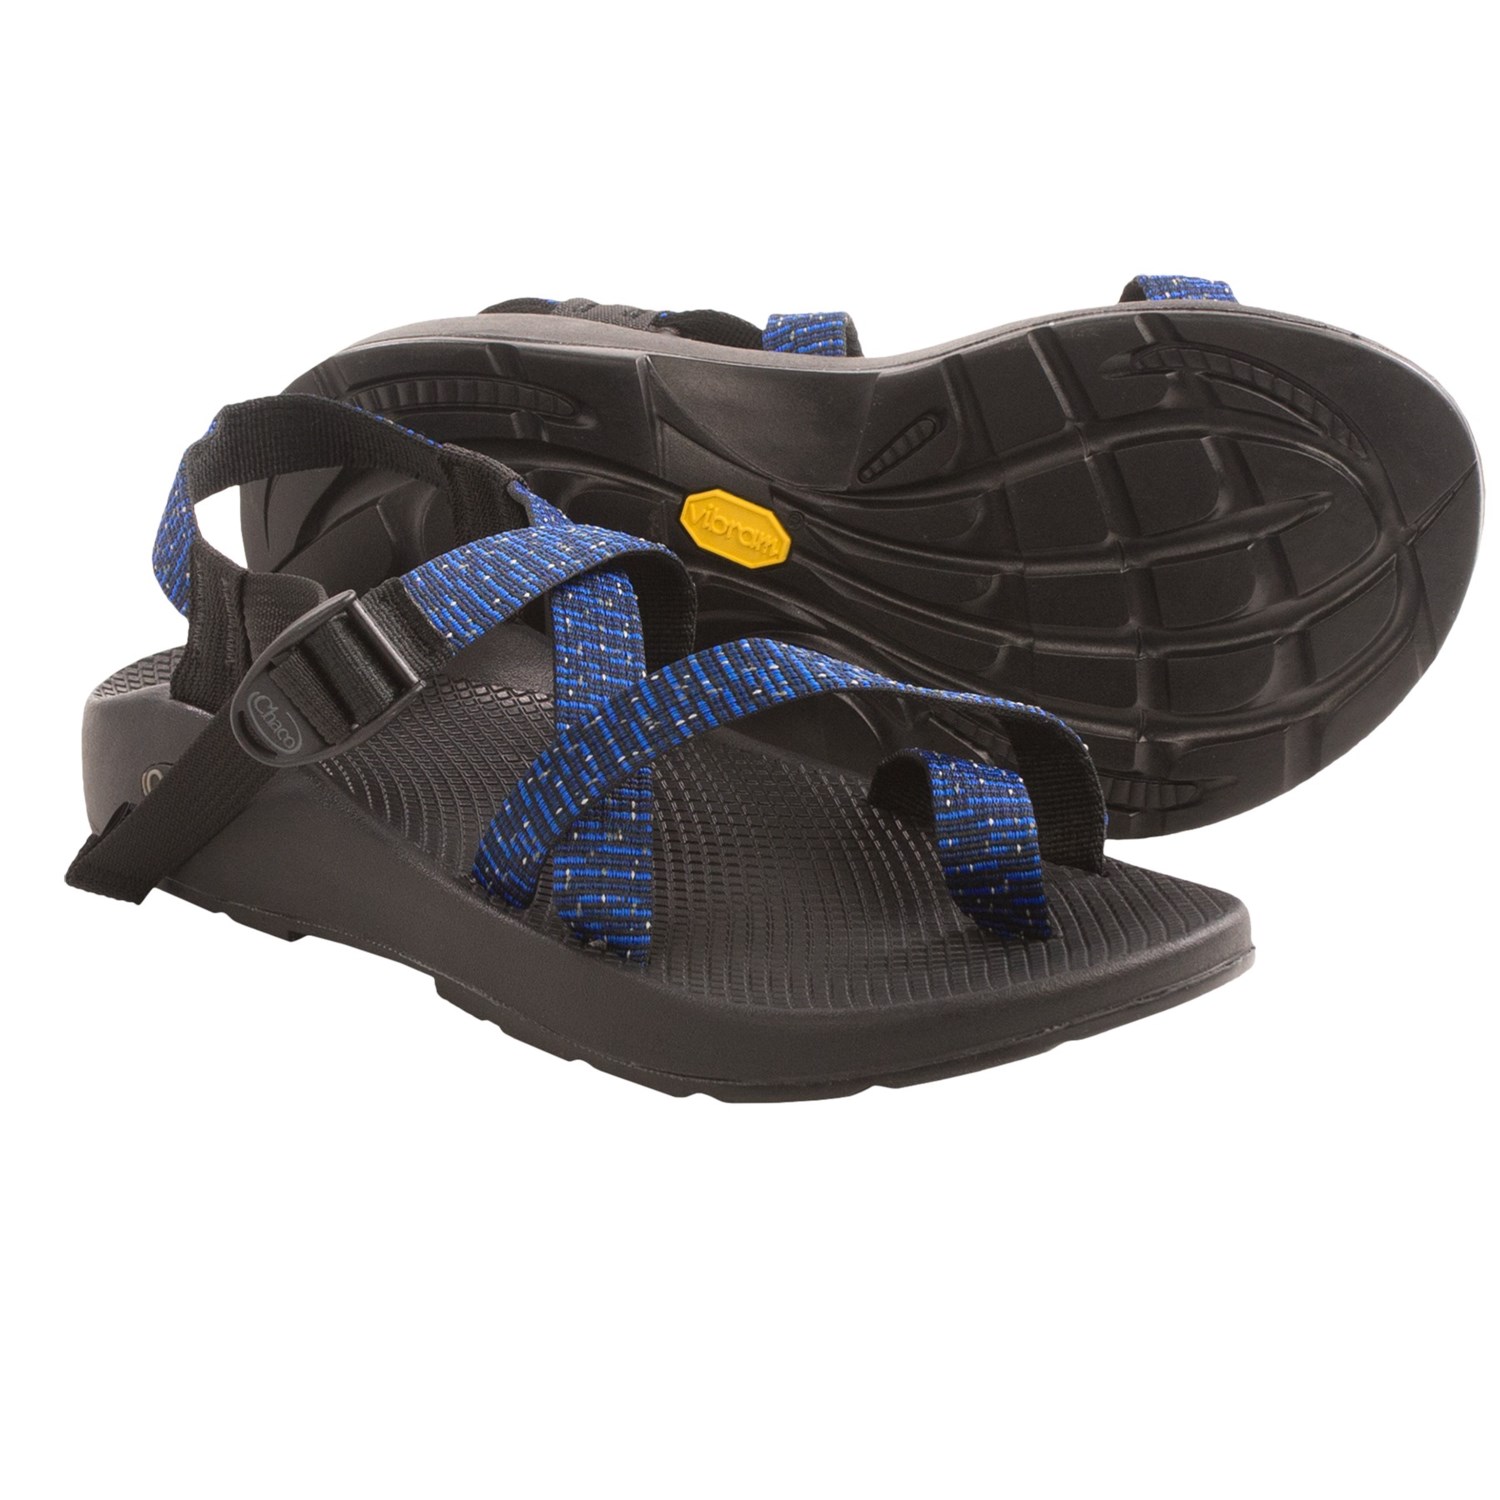 Chaco Z2 Pro Sport Sandals (For Men) in Fourteen